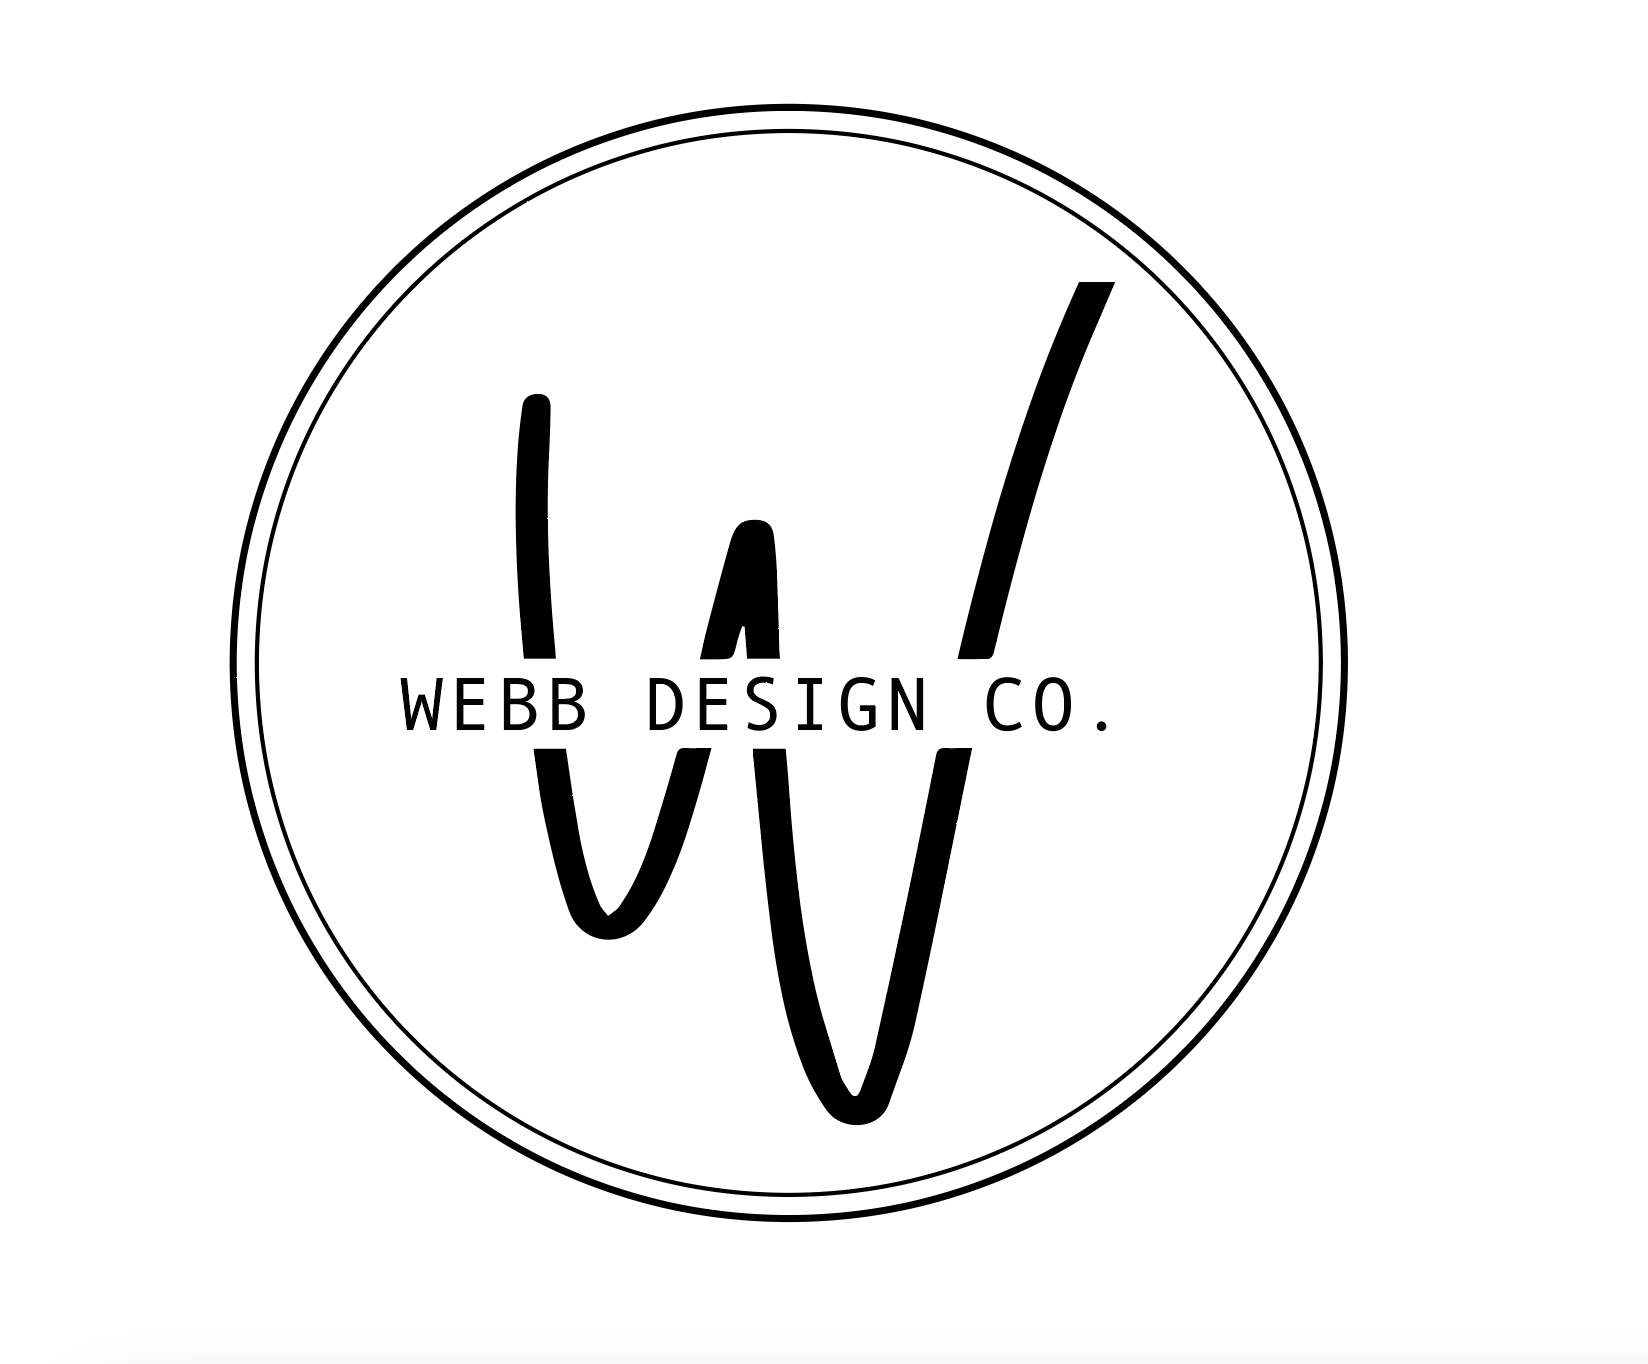 Webb Design Co.